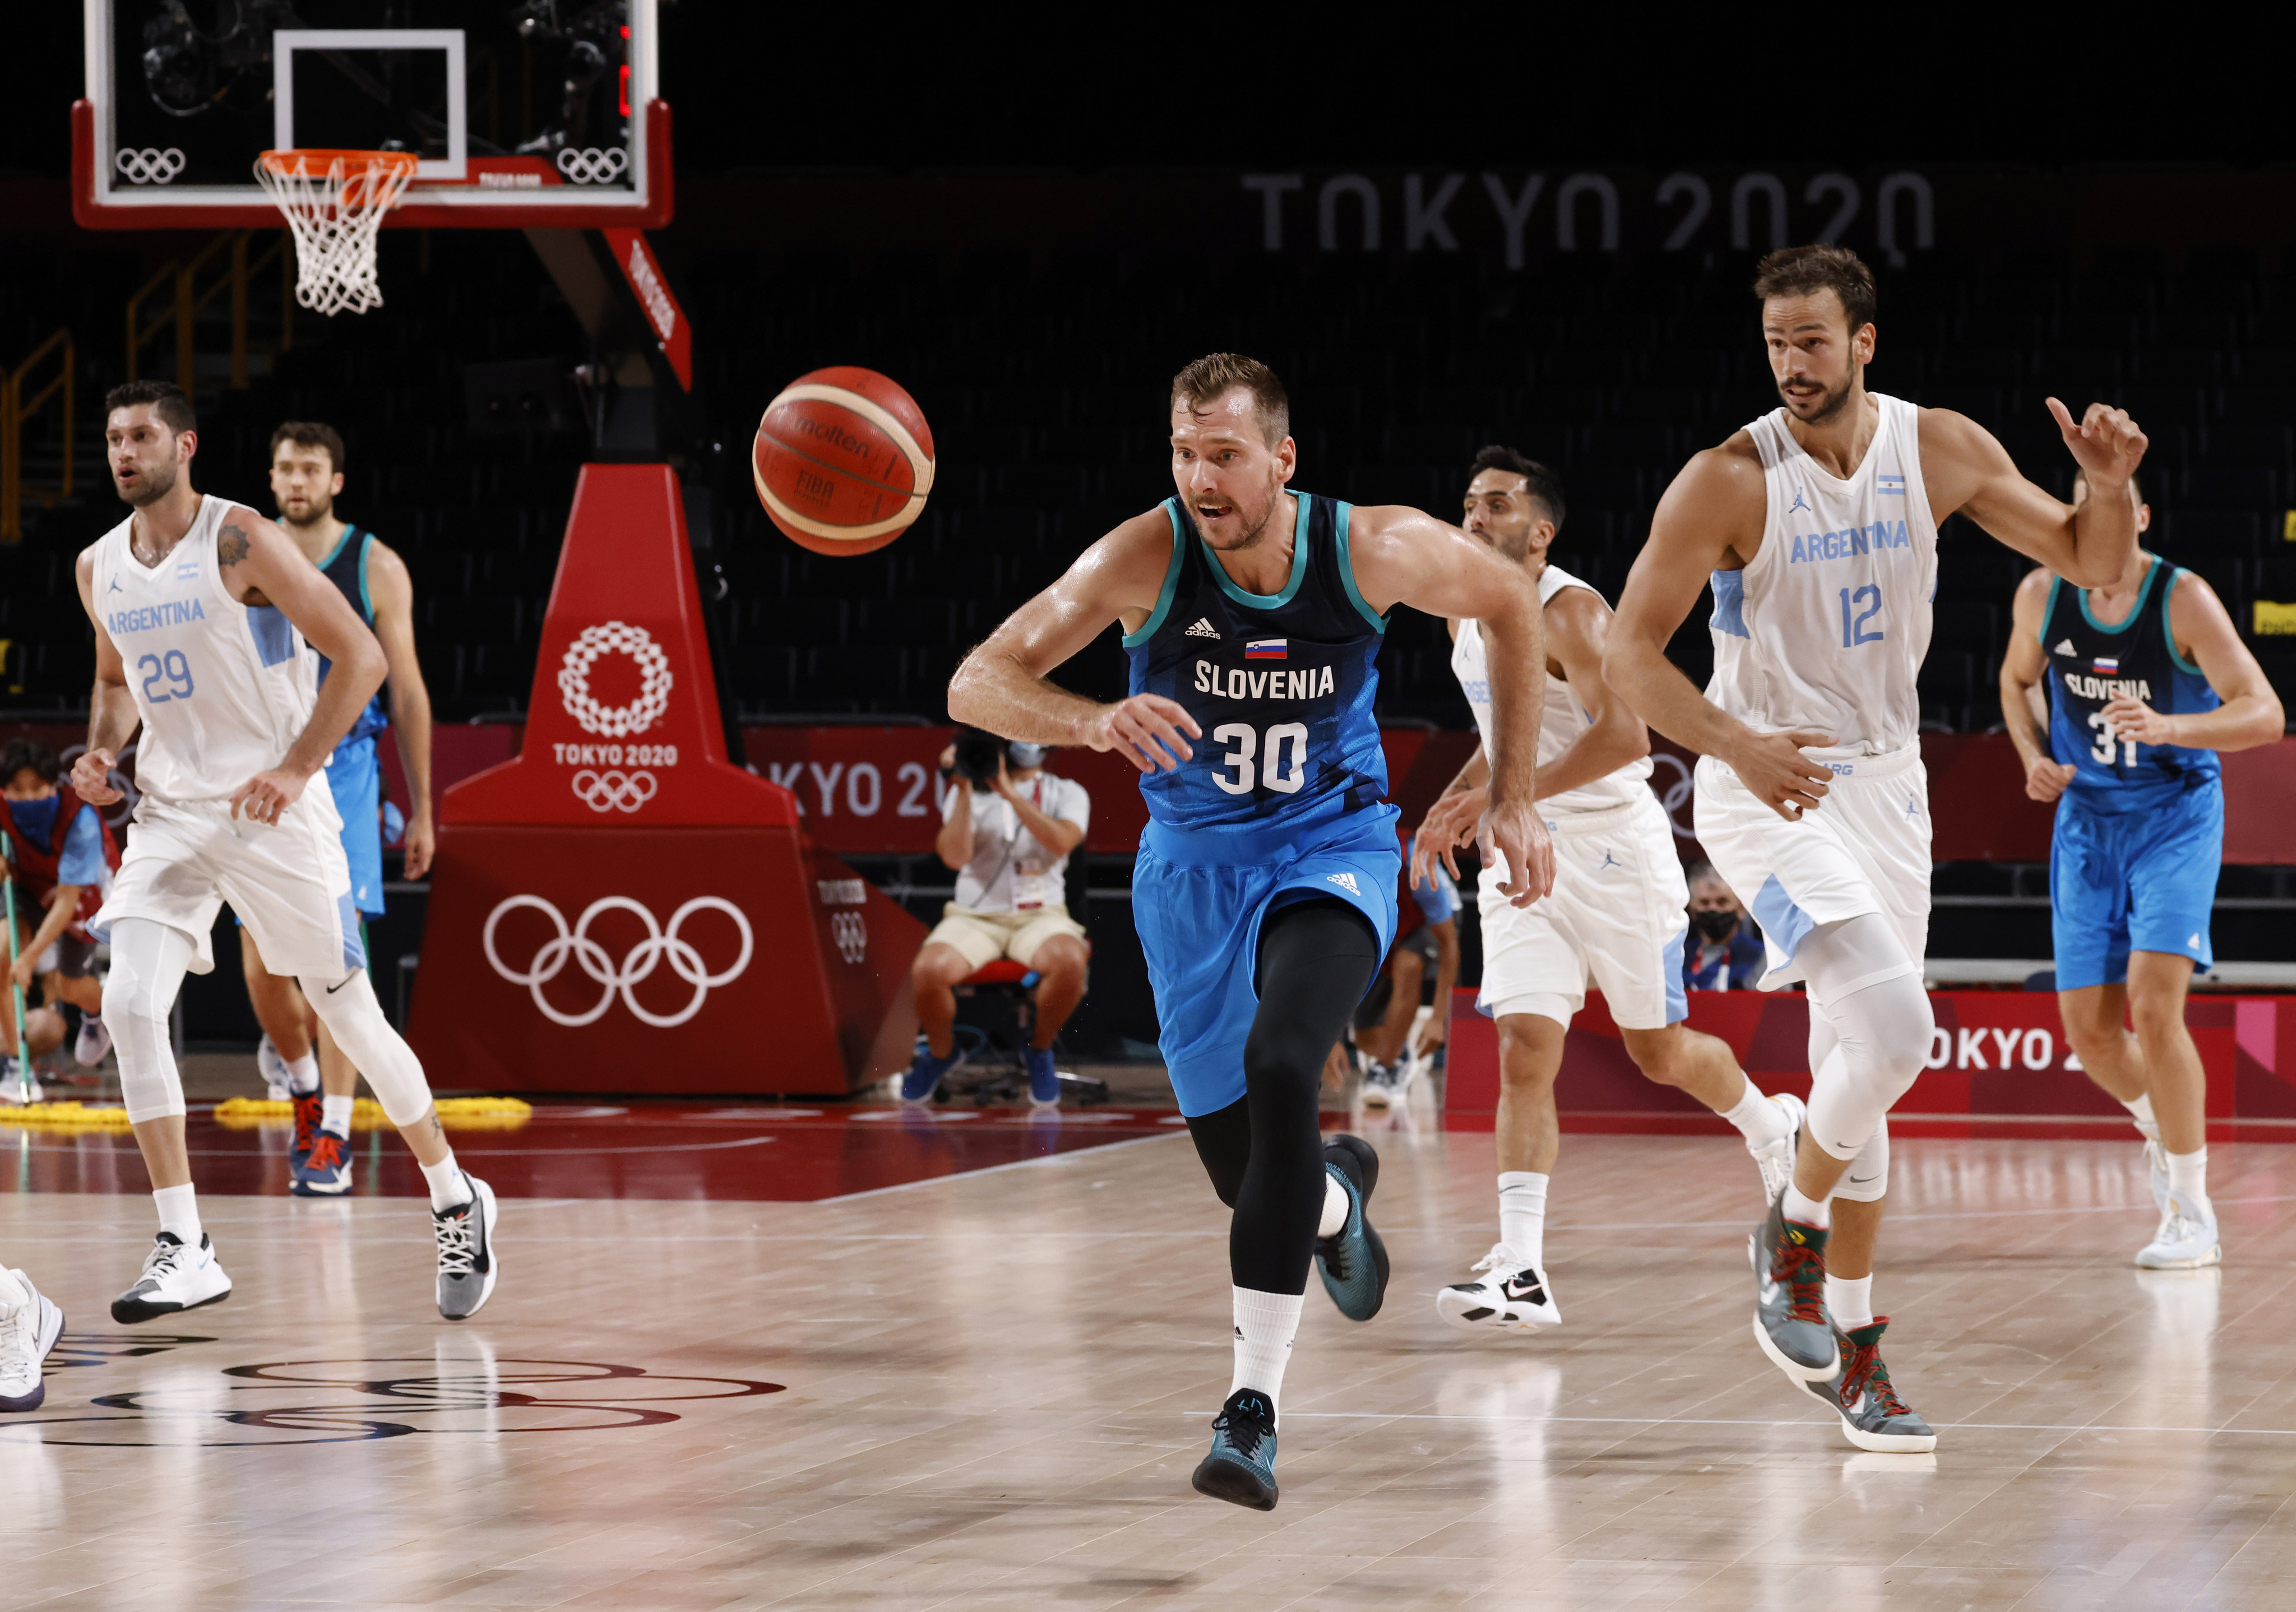 Olympic 'Wonder Boy': Luka Doncic debuts at Tokyo Games with